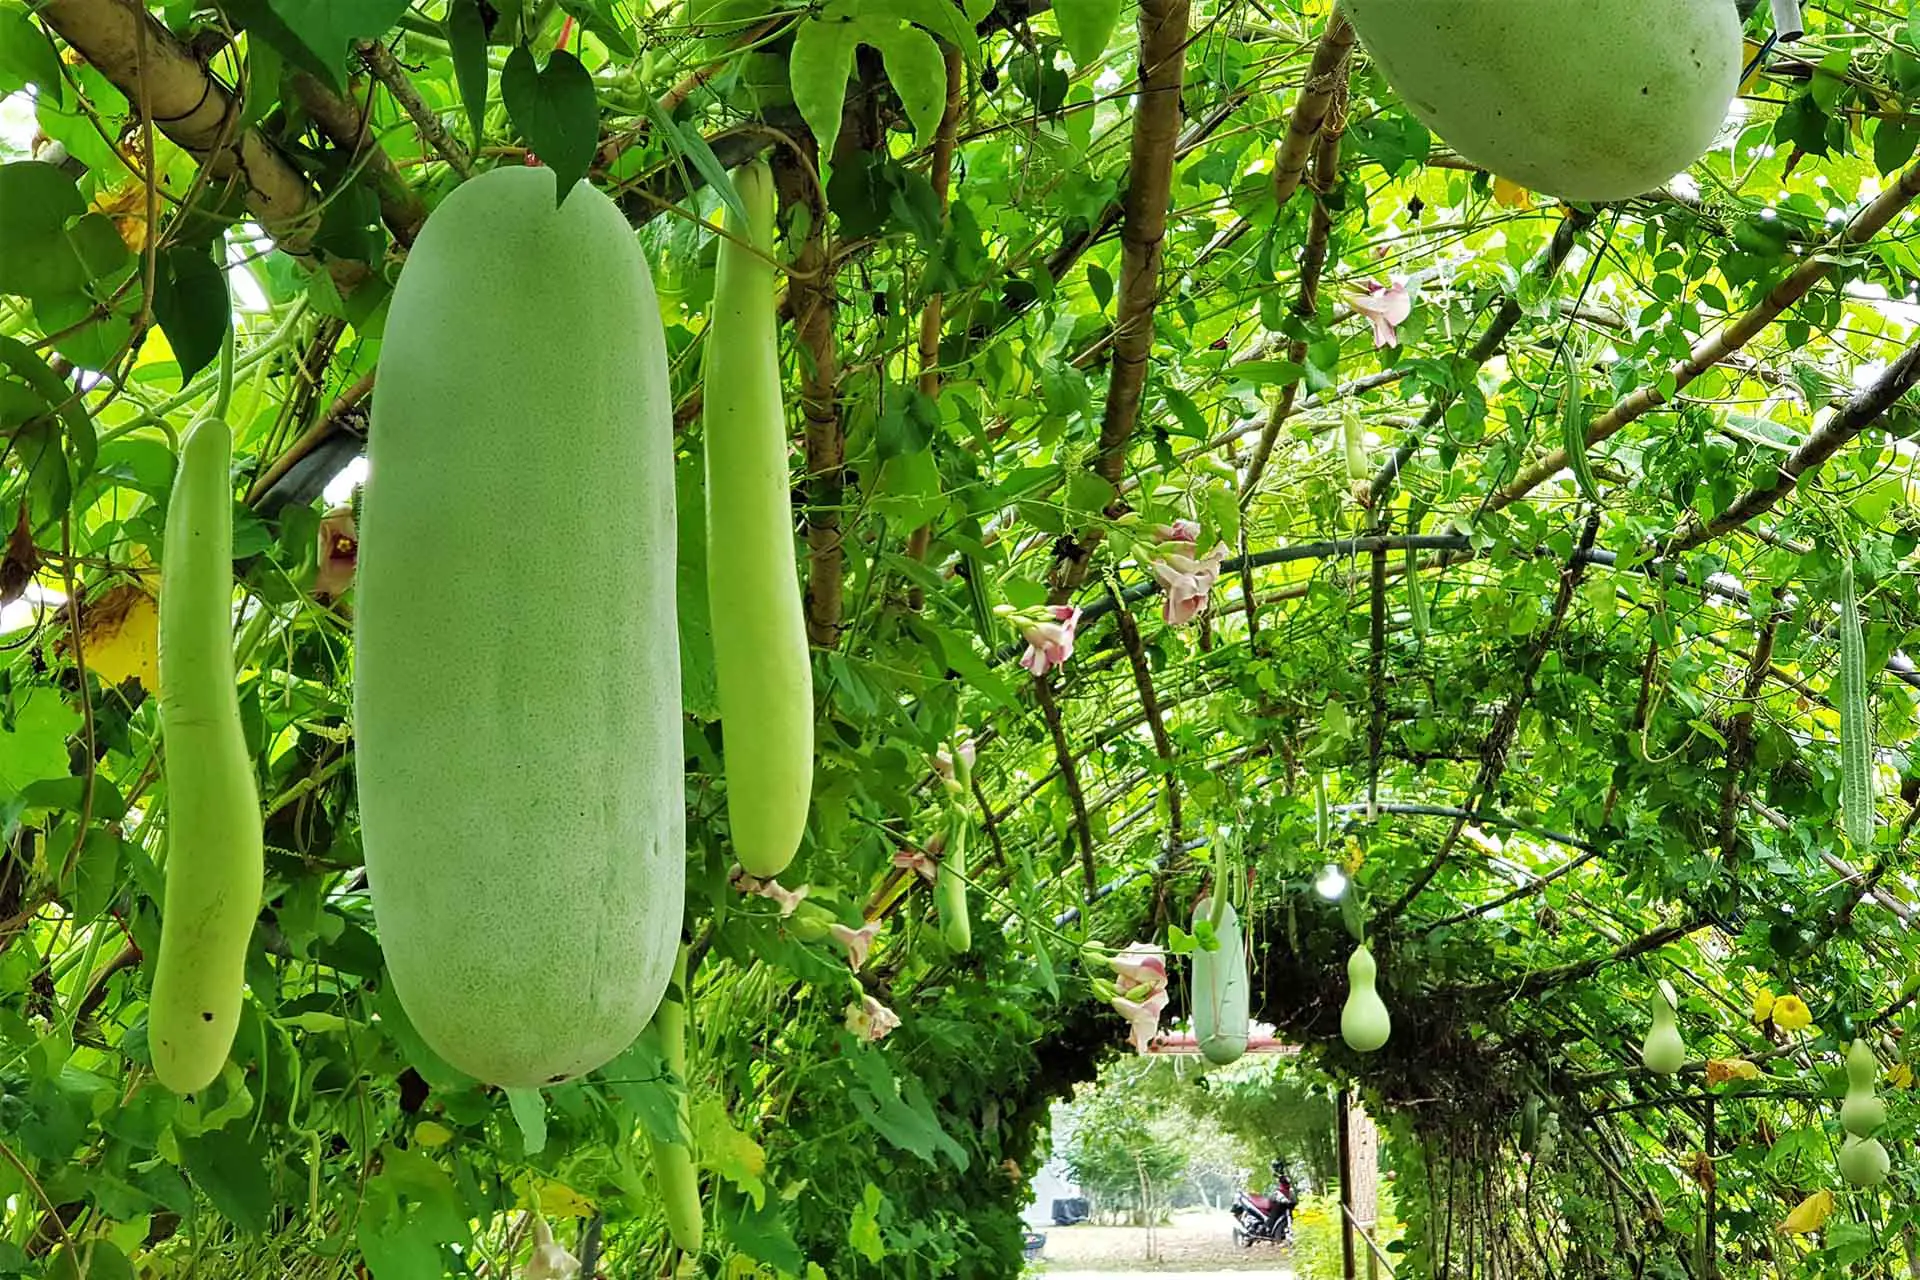 Gourds as a versatile plant